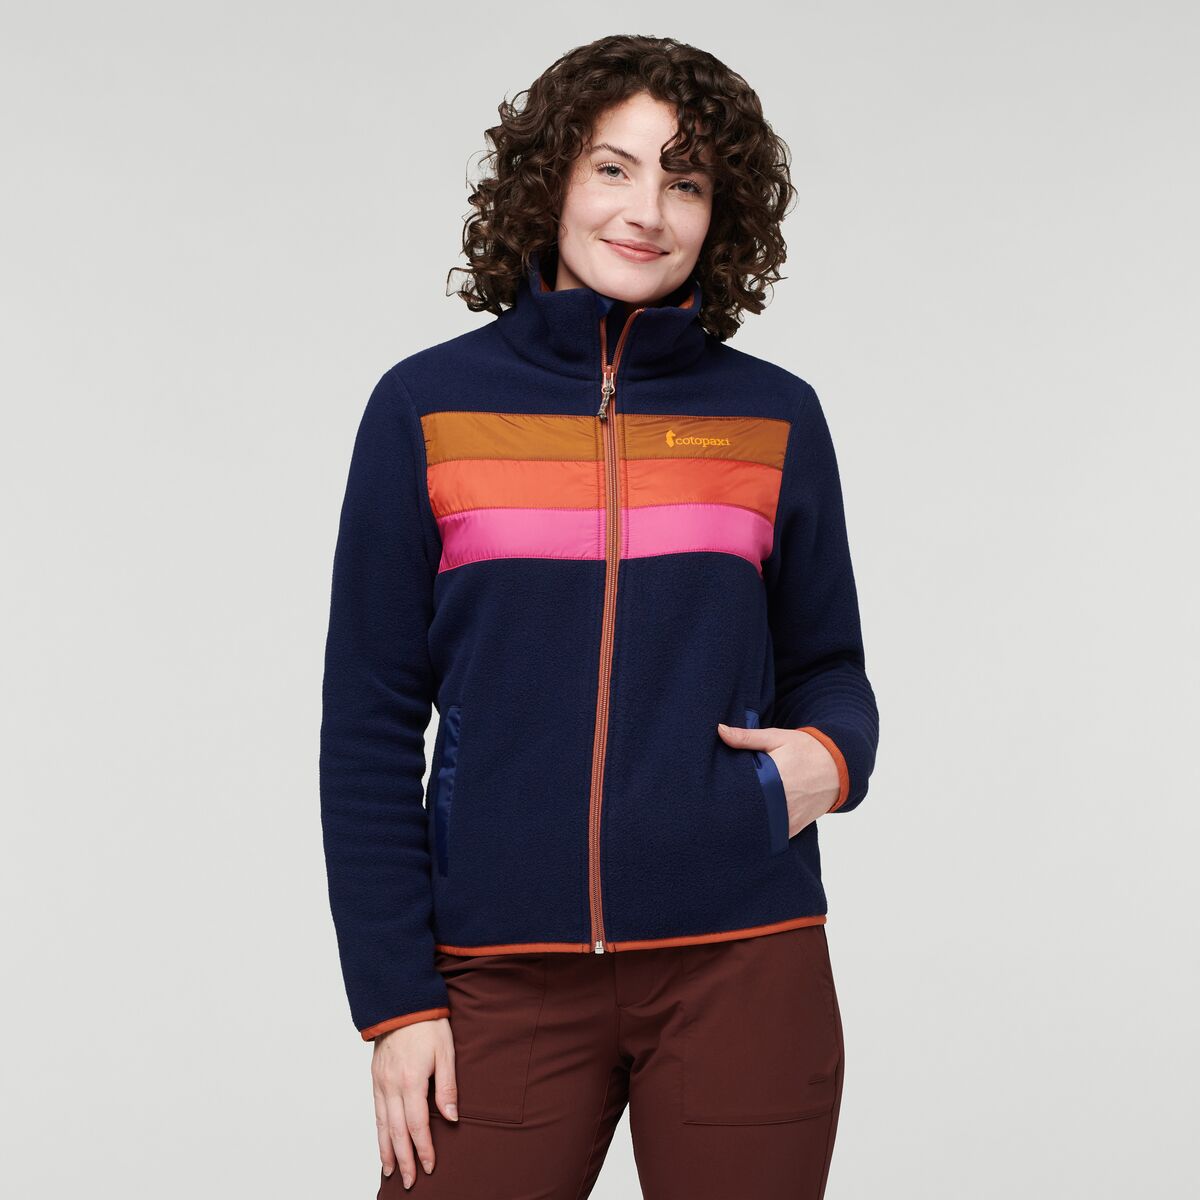 Cotopaxi - W's Teca Fleece Full-Zip Jacket - 100% recycled polyester - Weekendbee - sustainable sportswear